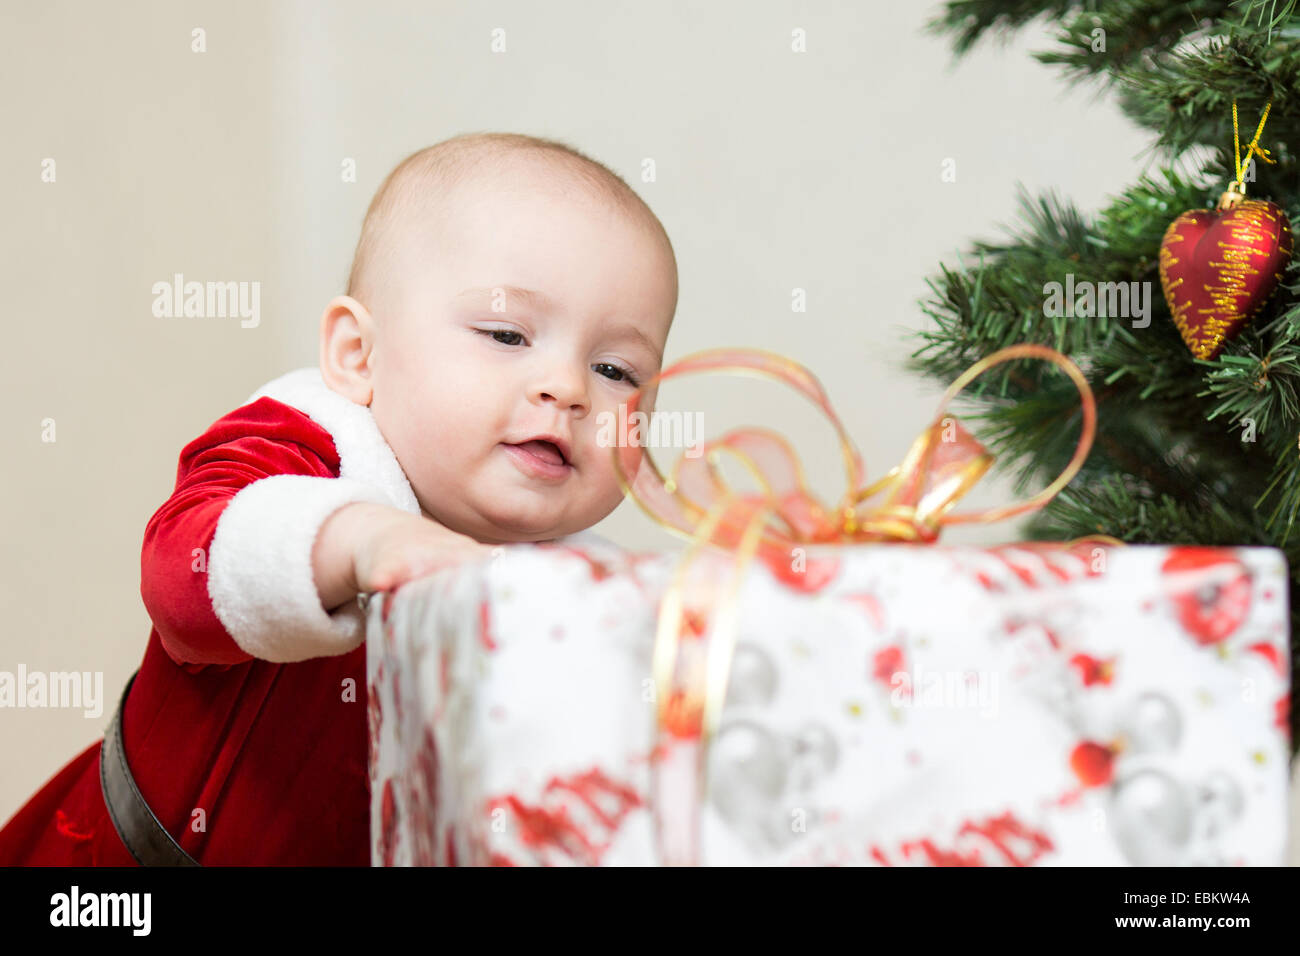 baby with big gift box on christmas tree background Stock Photo